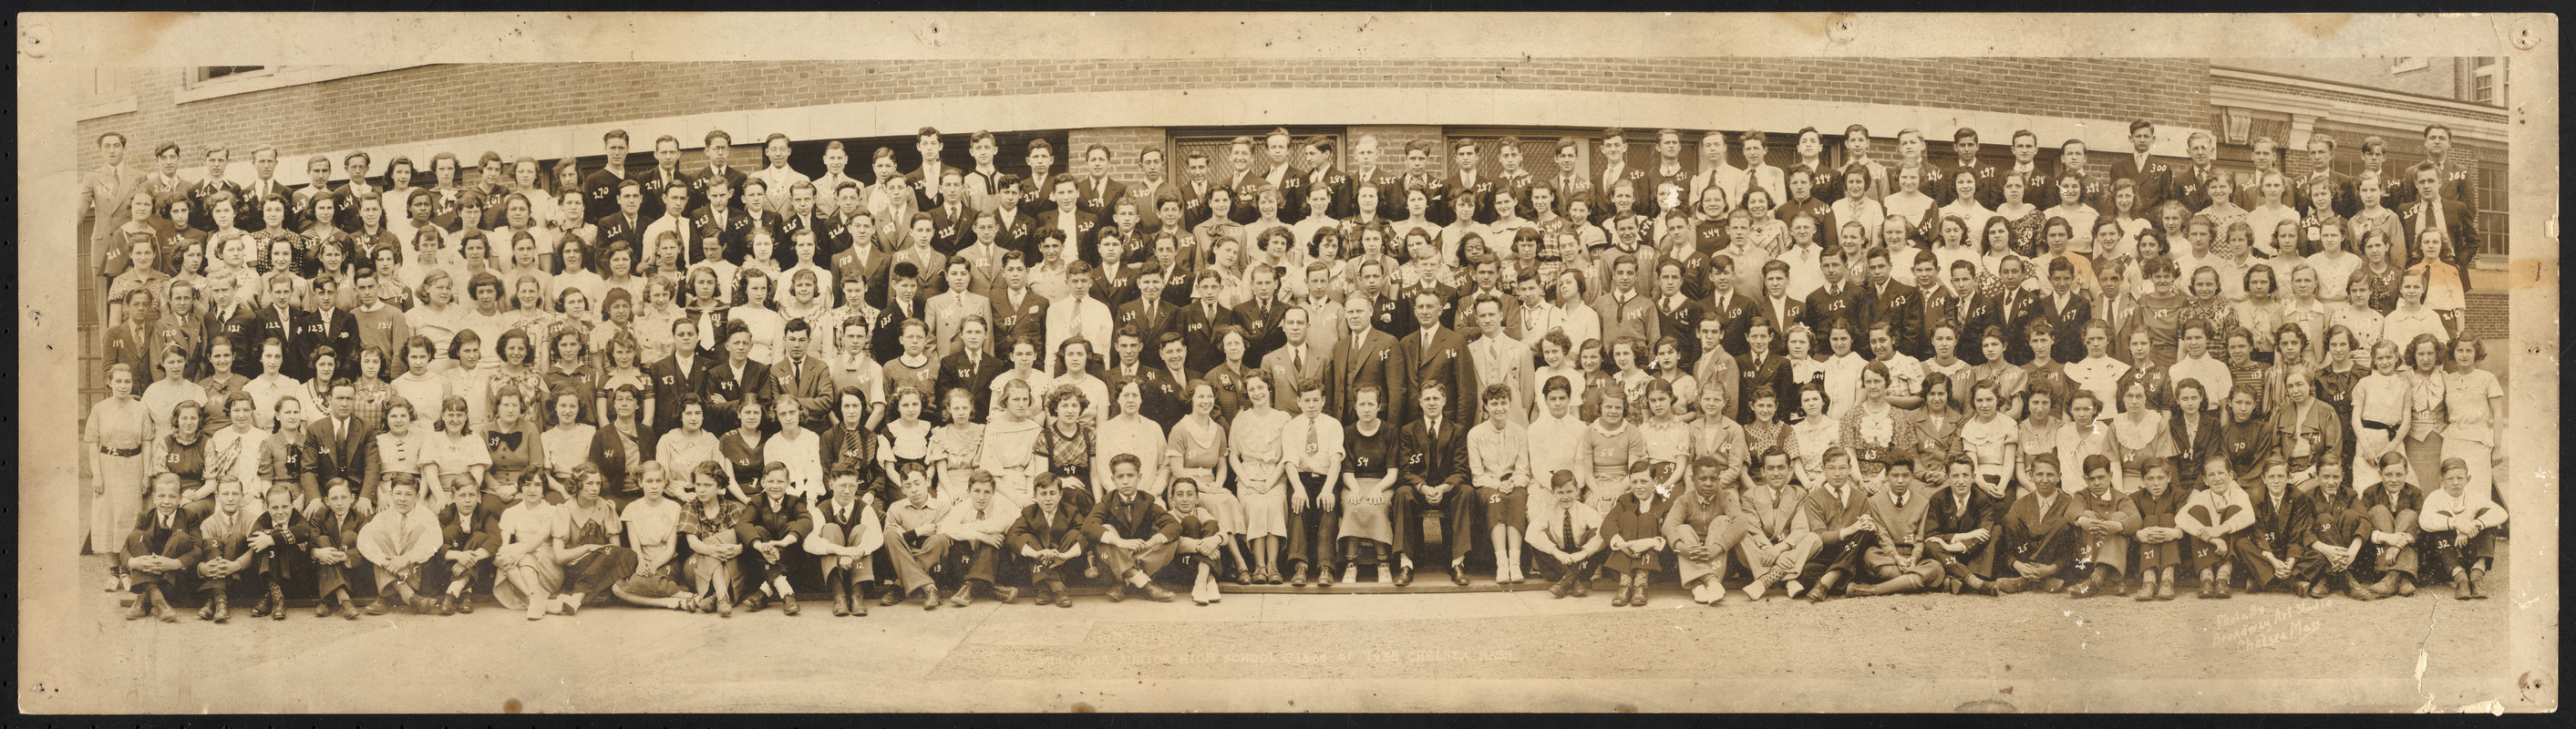 Williams Junior High School class of 1935, Chelsea Mass.